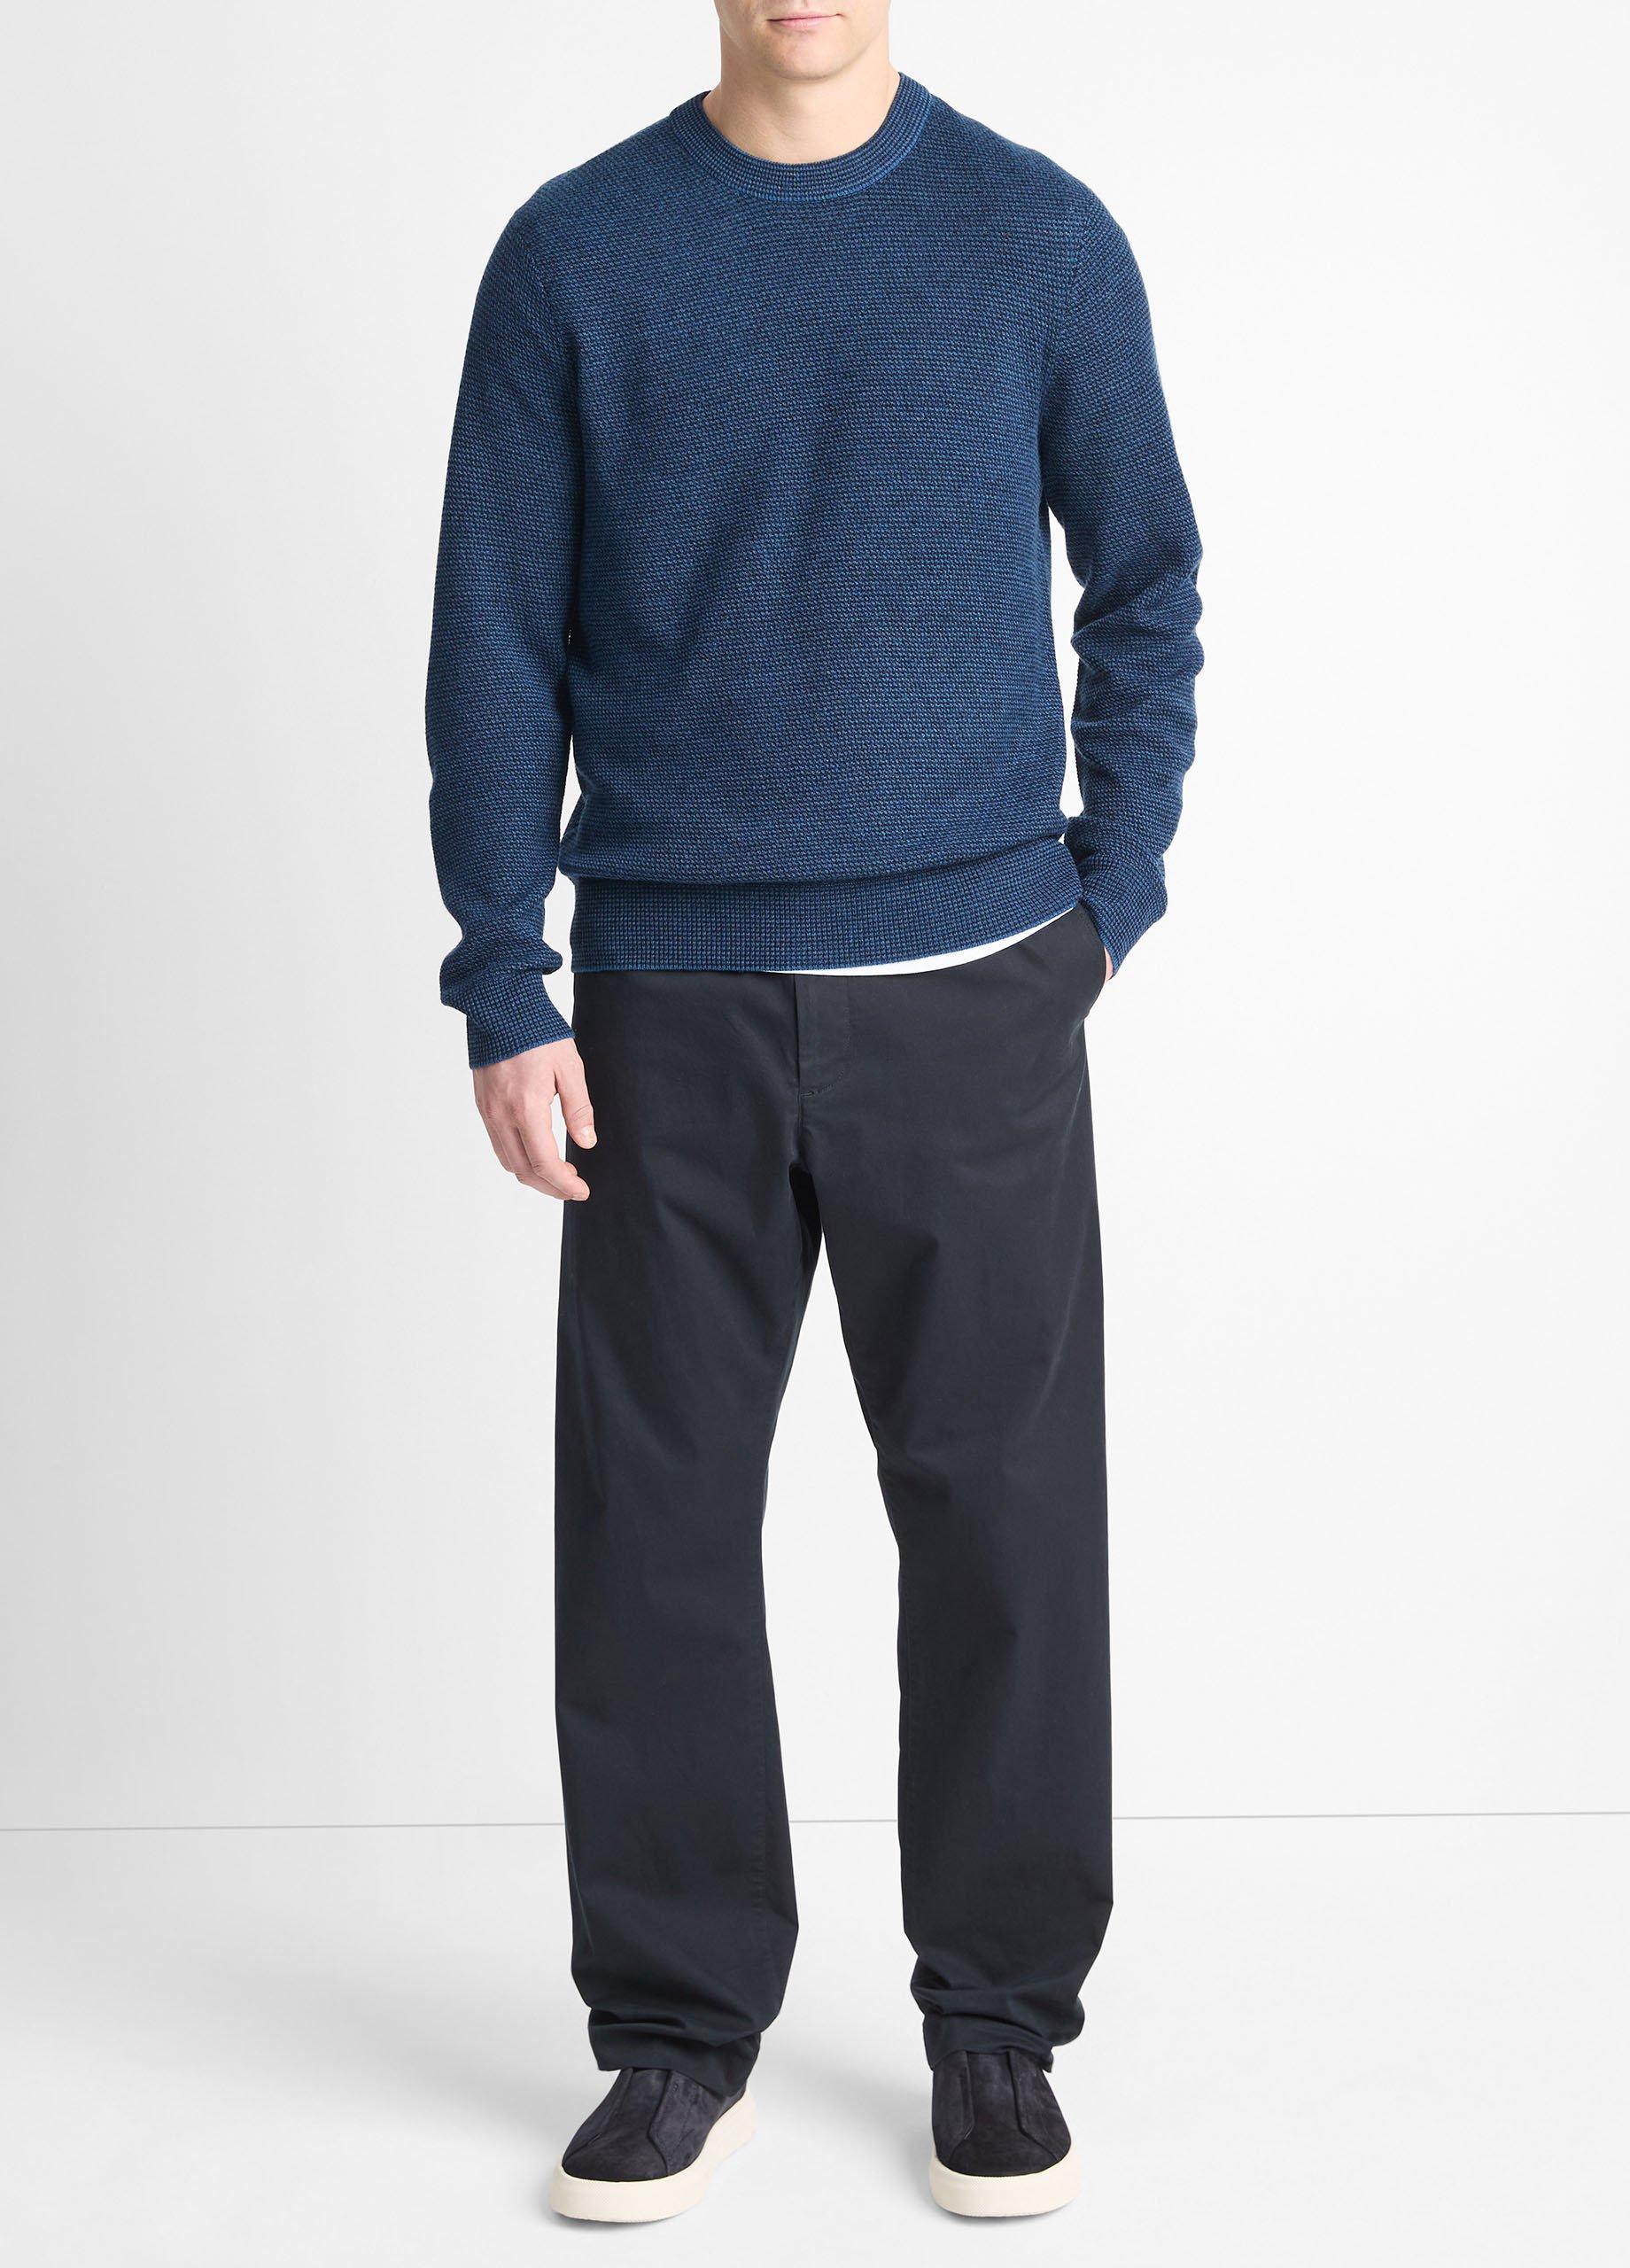 Two-tone Merino Wool Mesh Sweater, Shaded Teal/coastal Blue, Size L Vince